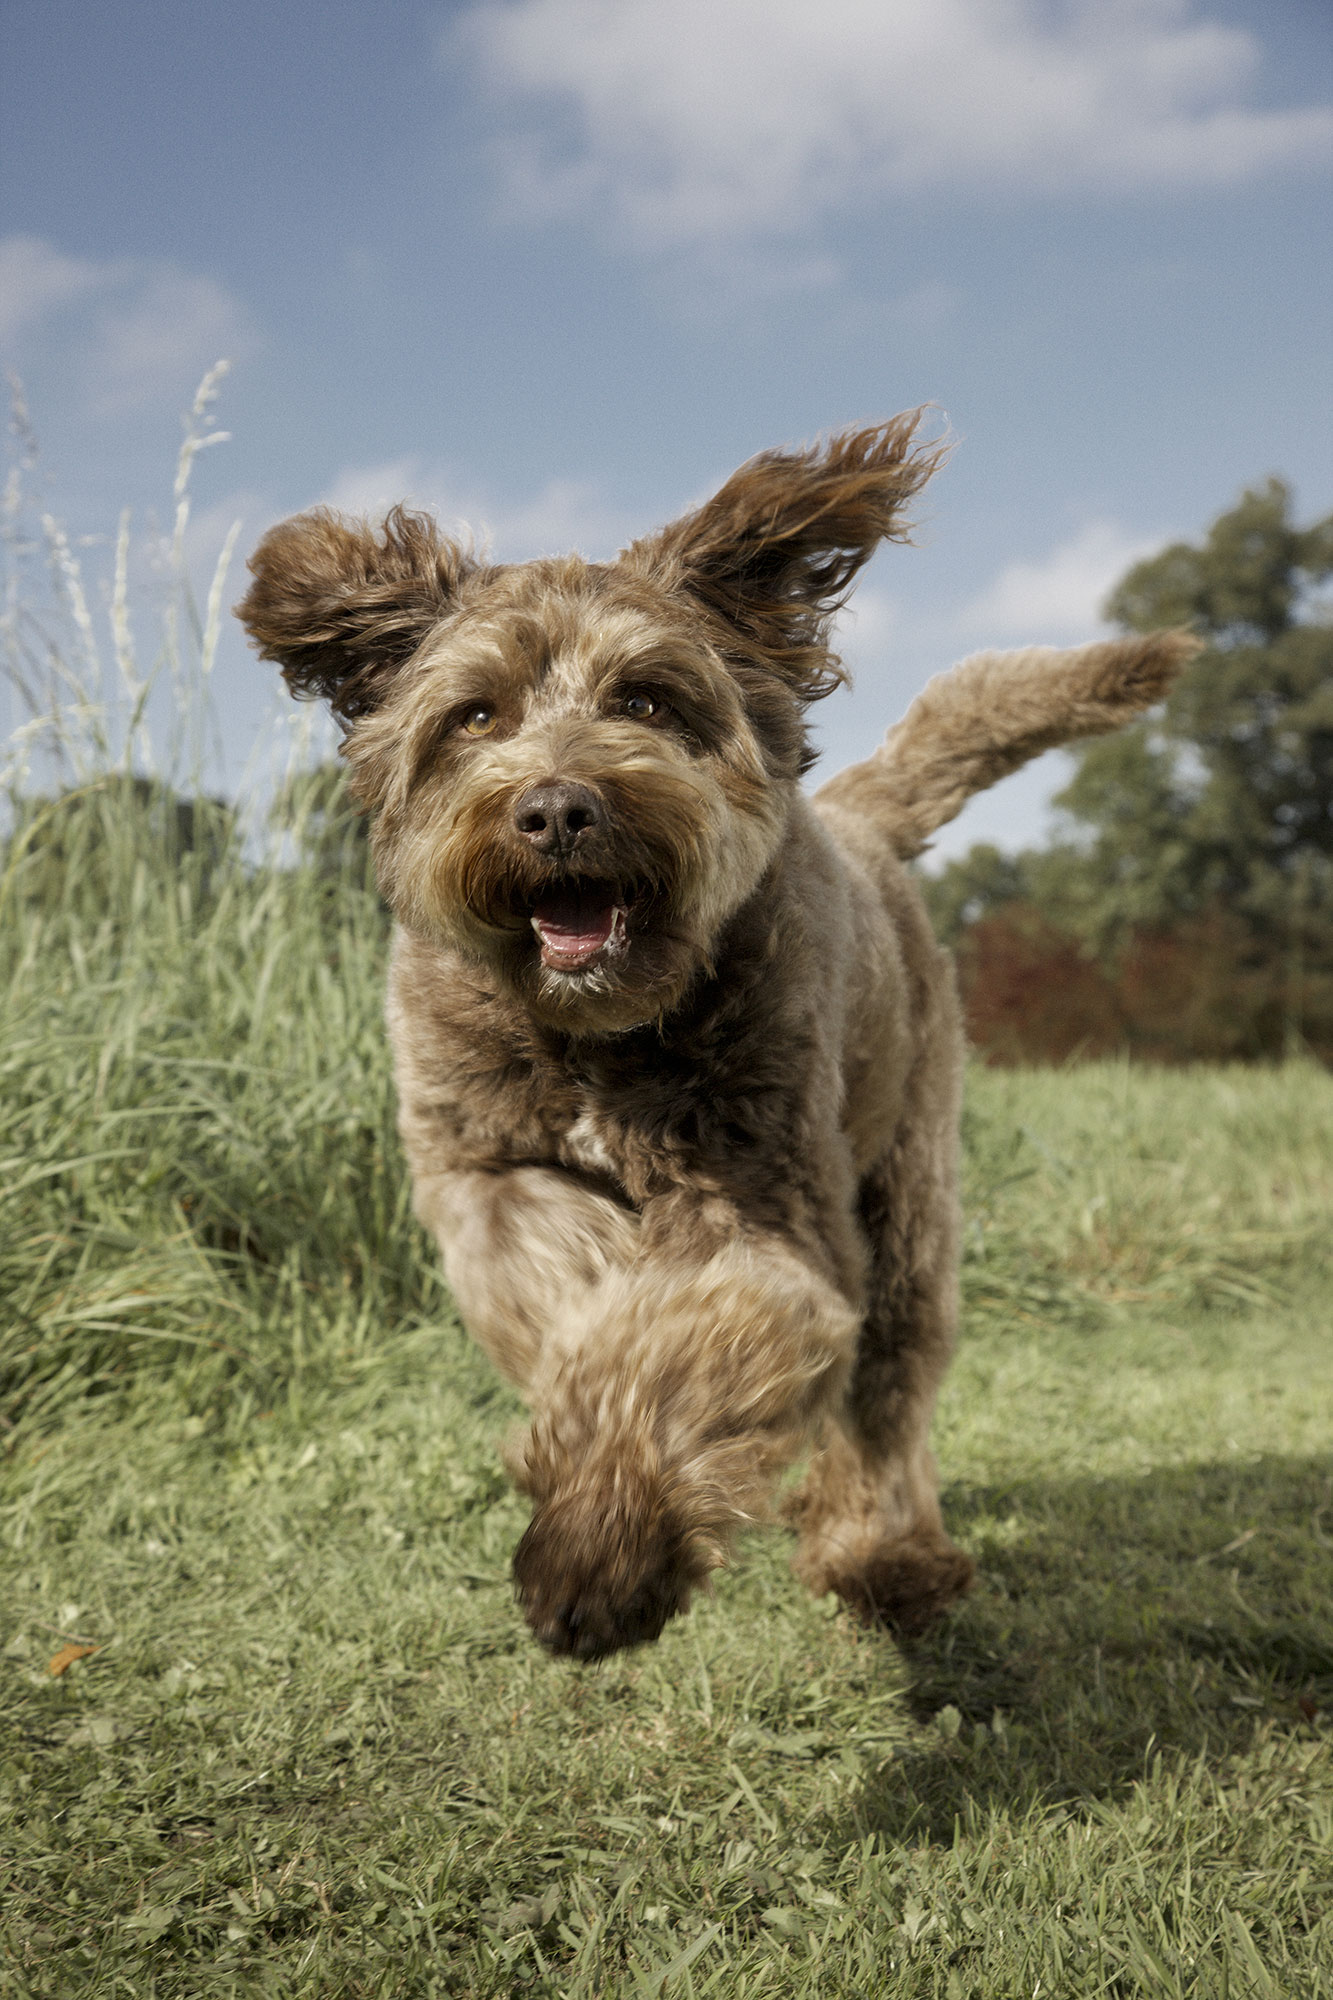 Dog running in field photograph 